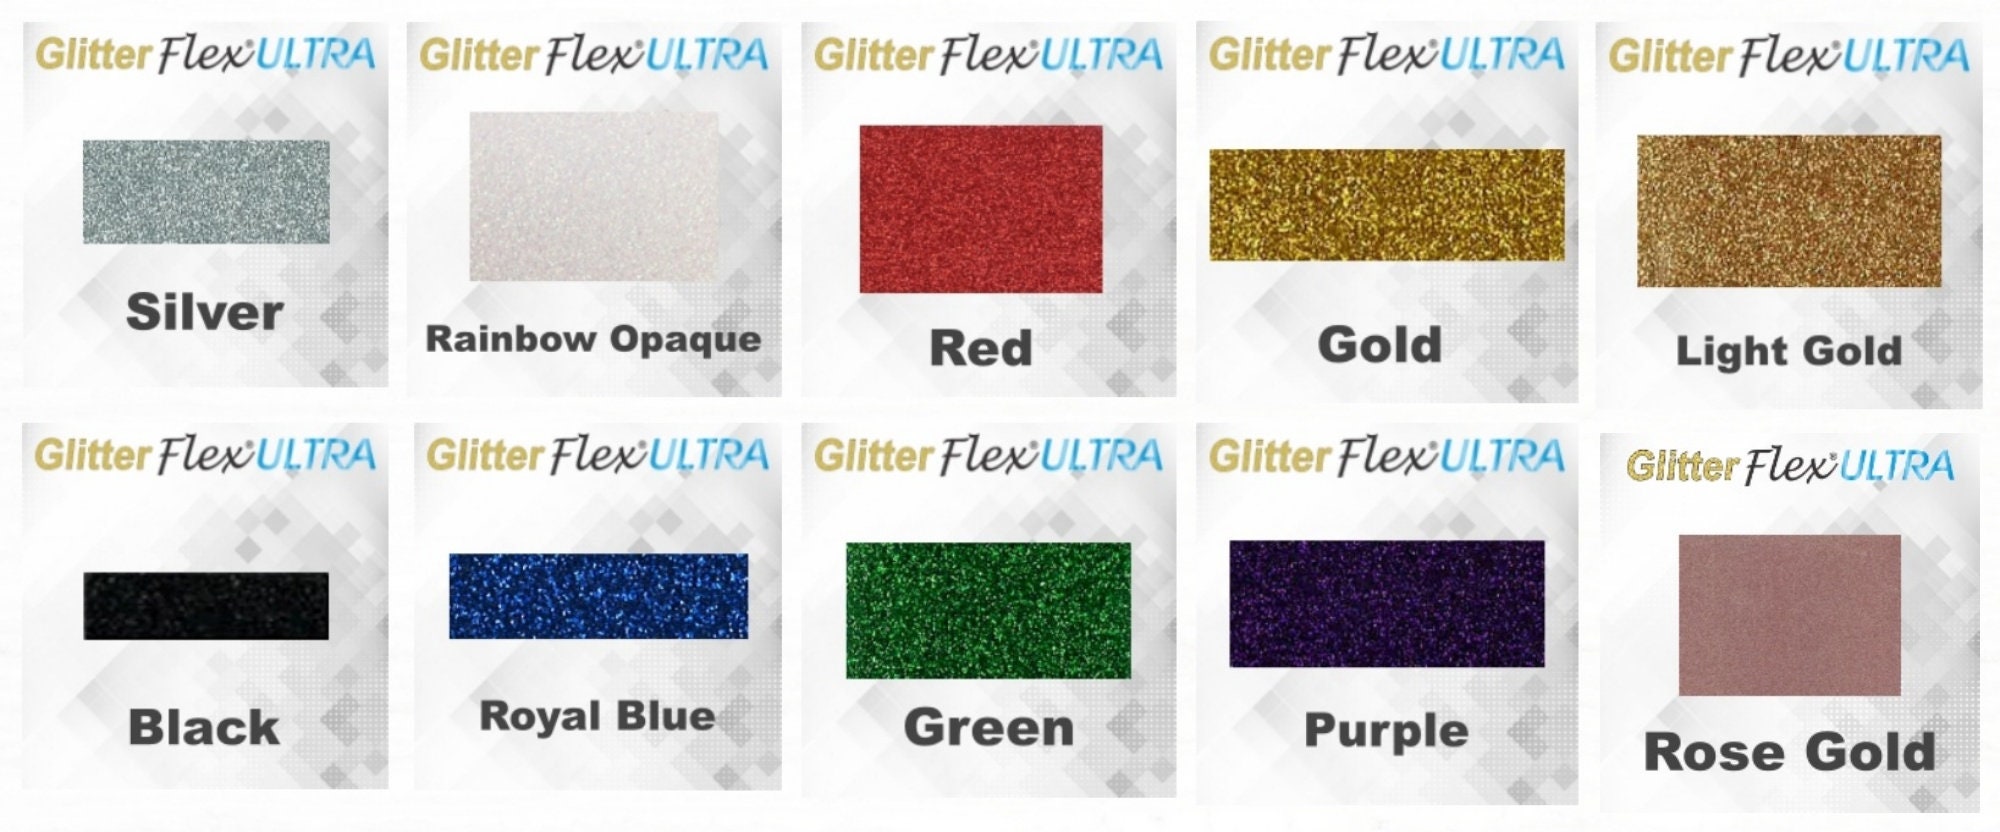 GLITTERFLEX ULTRA RED GLITTER HTV 20 - Direct Vinyl Supply